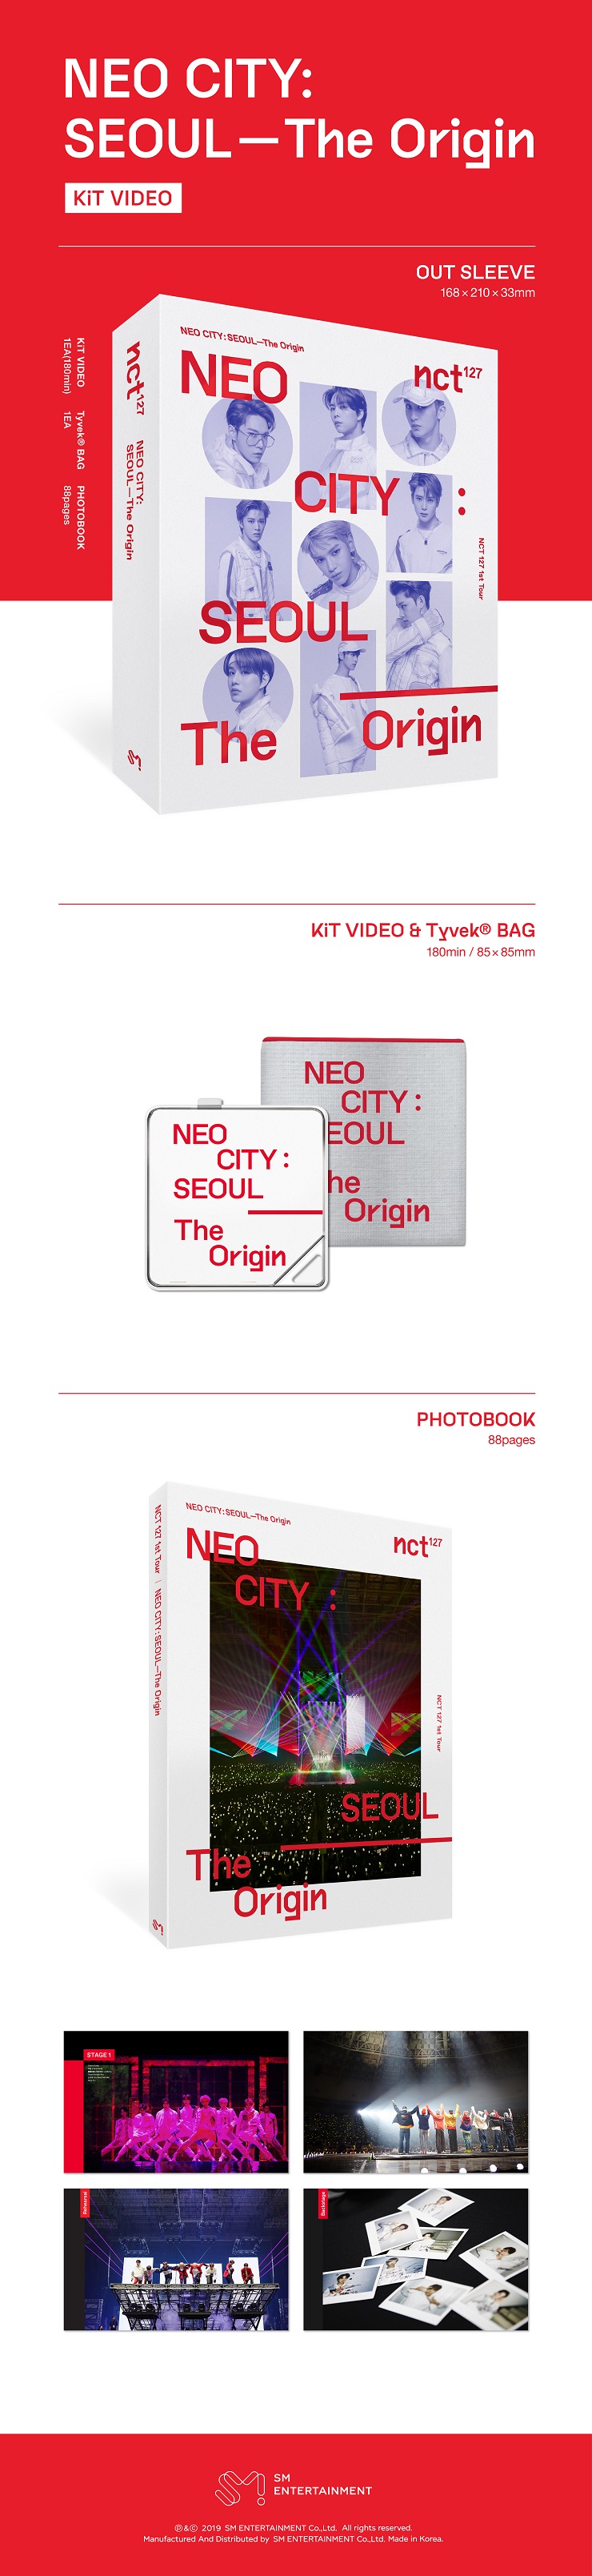 NCT 127(엔시티 127) - NEO CITY : SEOUL - THE ORIGIN KiT Video